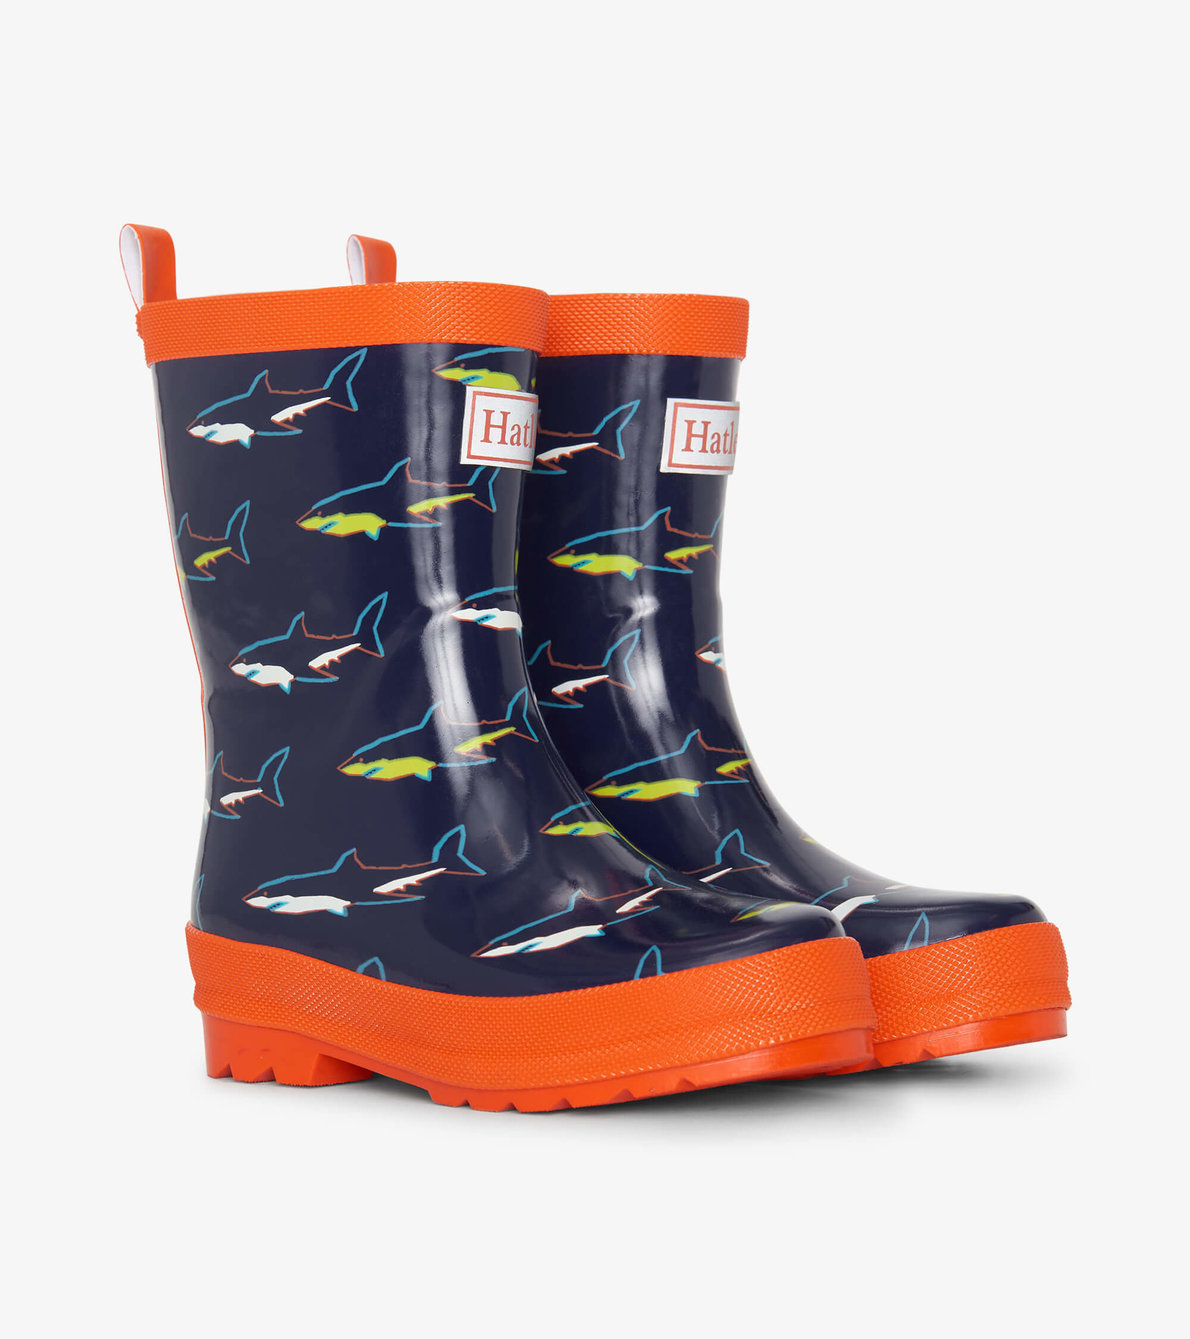 View larger image of Boys Shark Shiny Rain Boots